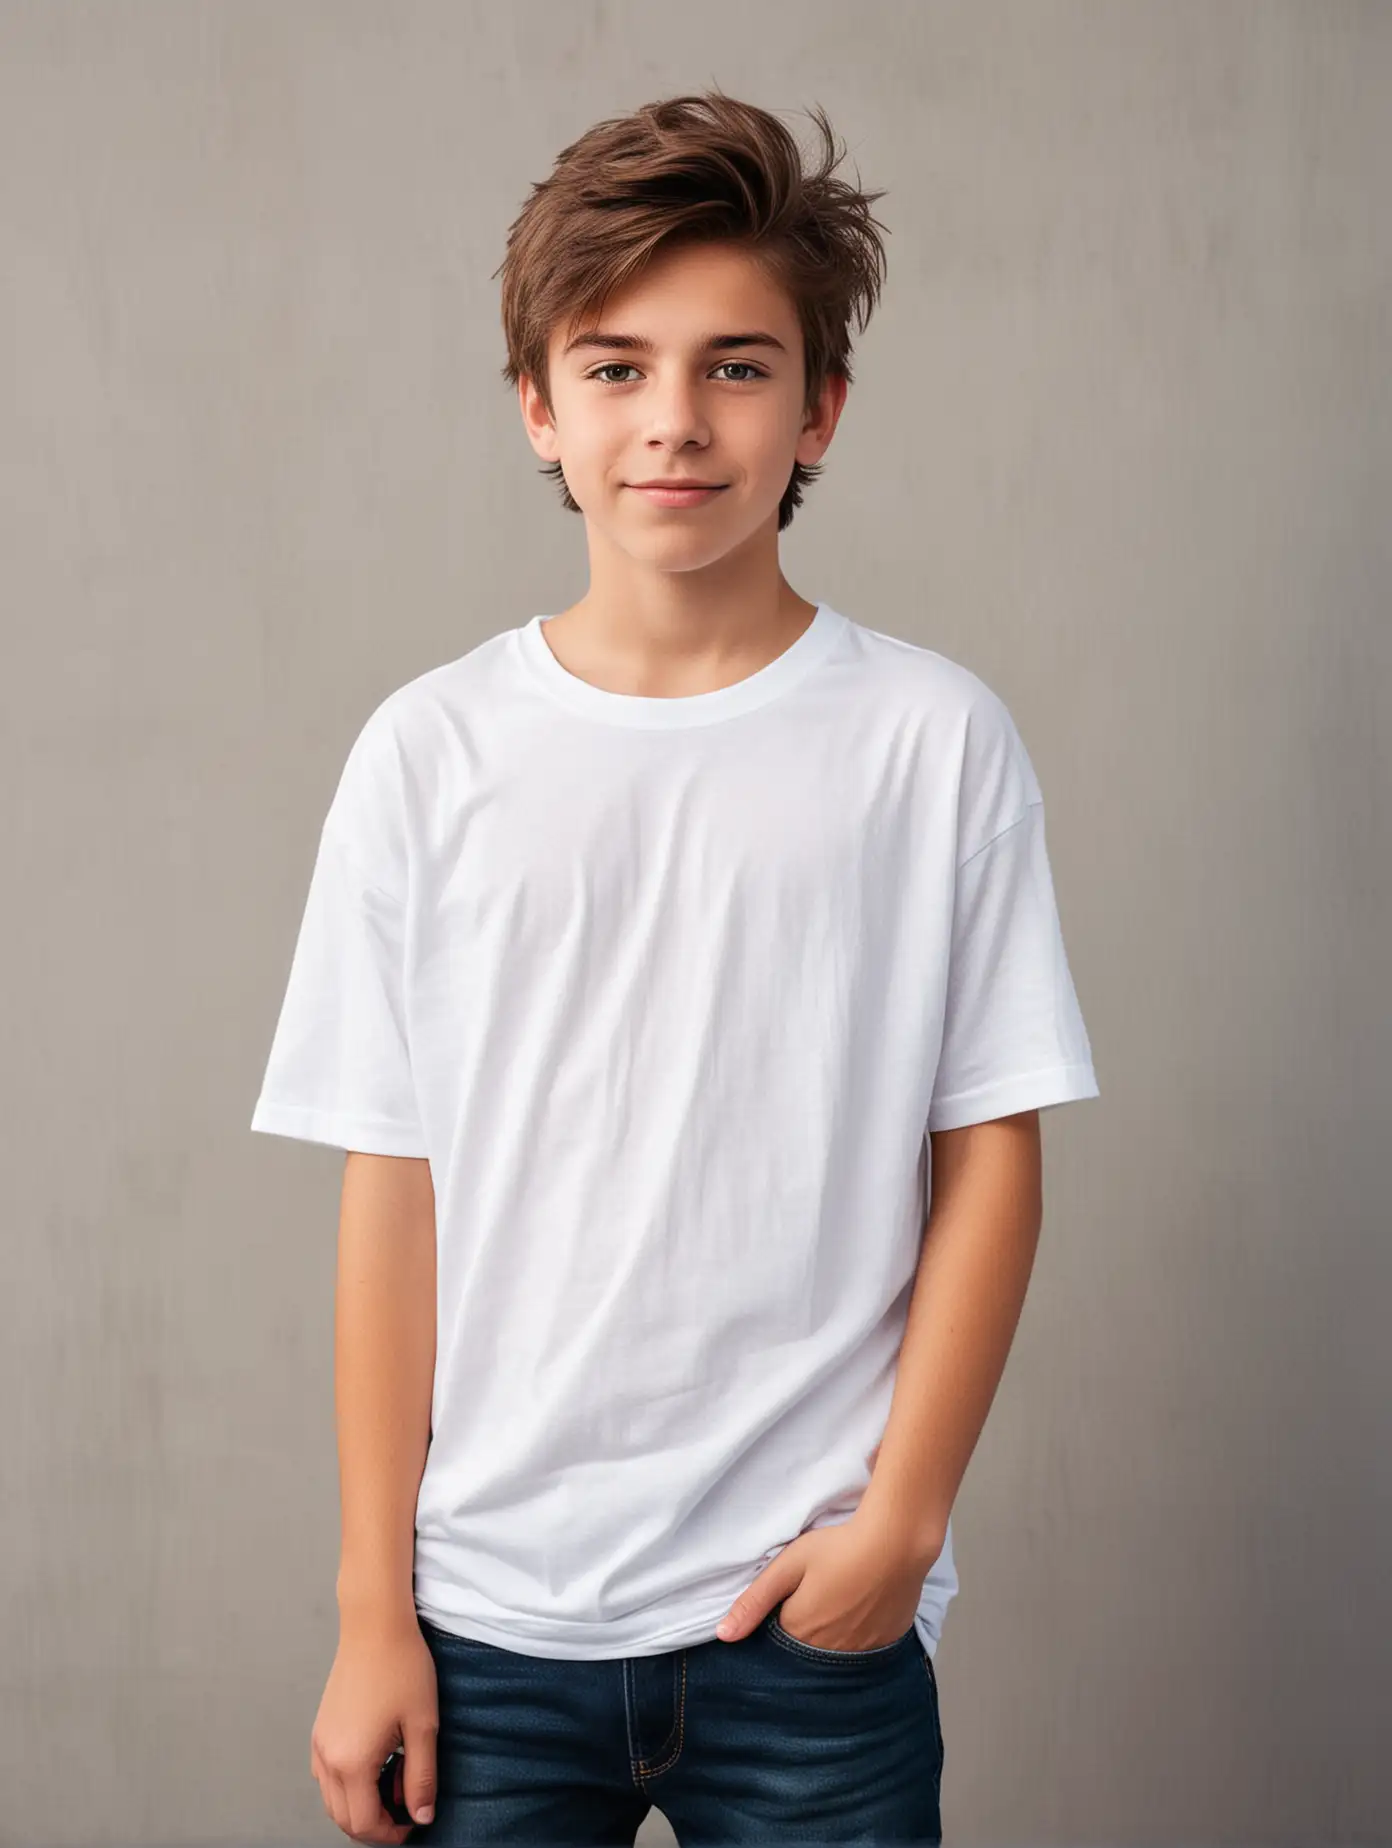 Cool teenage boy in white tshirt